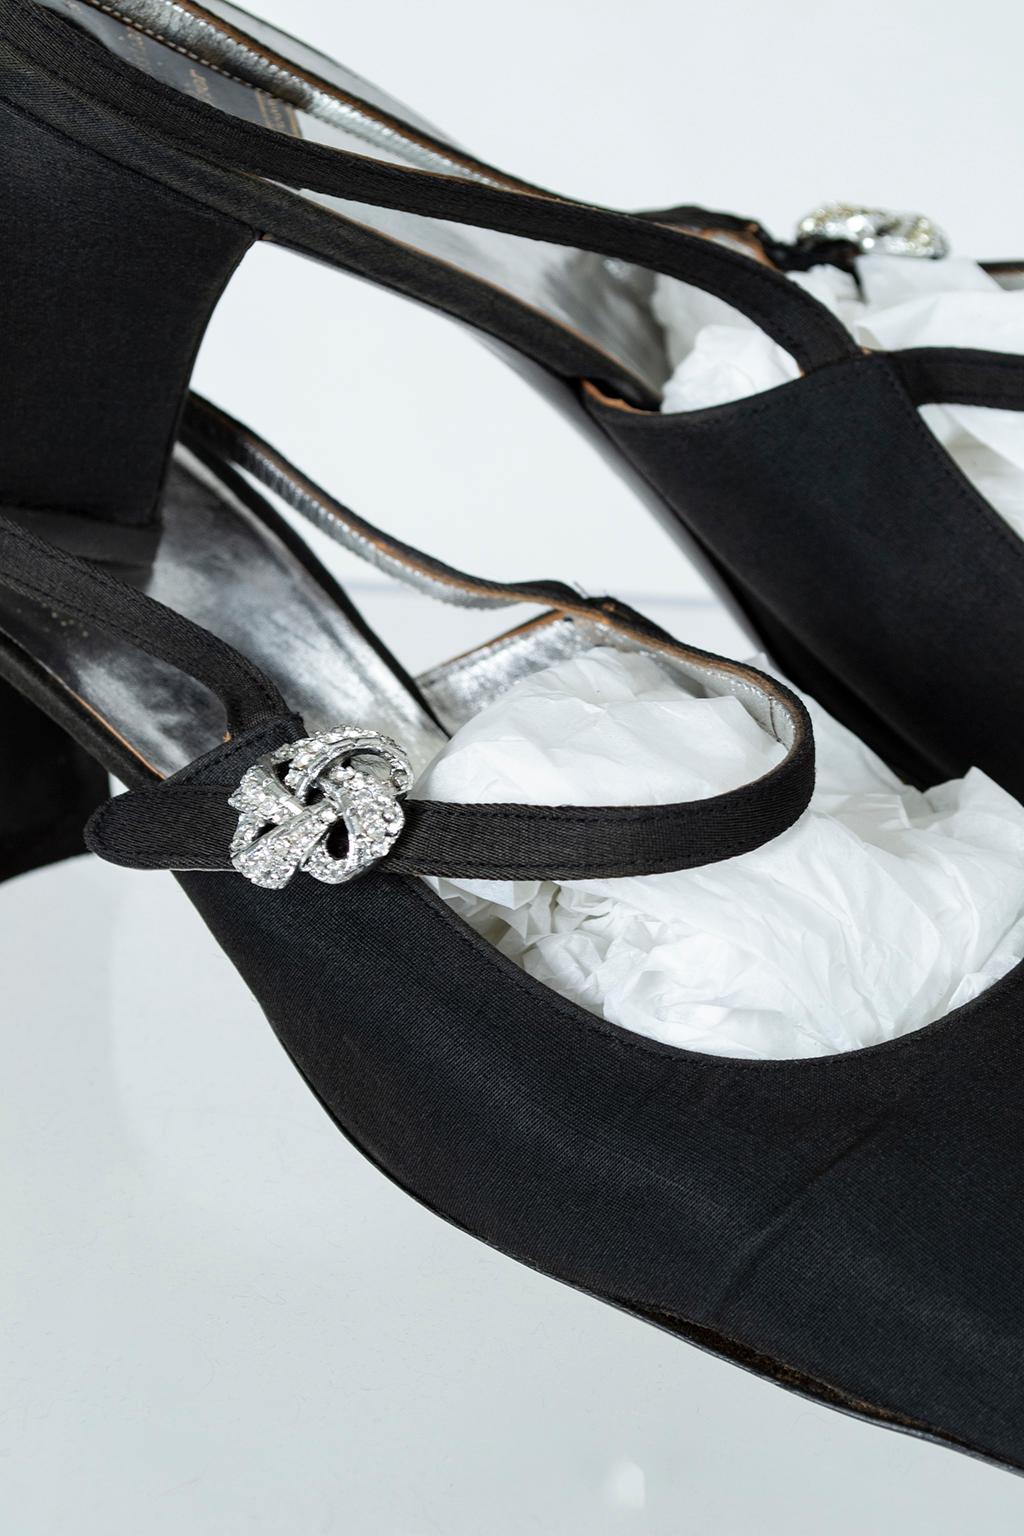 Black Souliers Christian Dior Jeweled Slingback Evening Sandal – US 10, 1960s 1